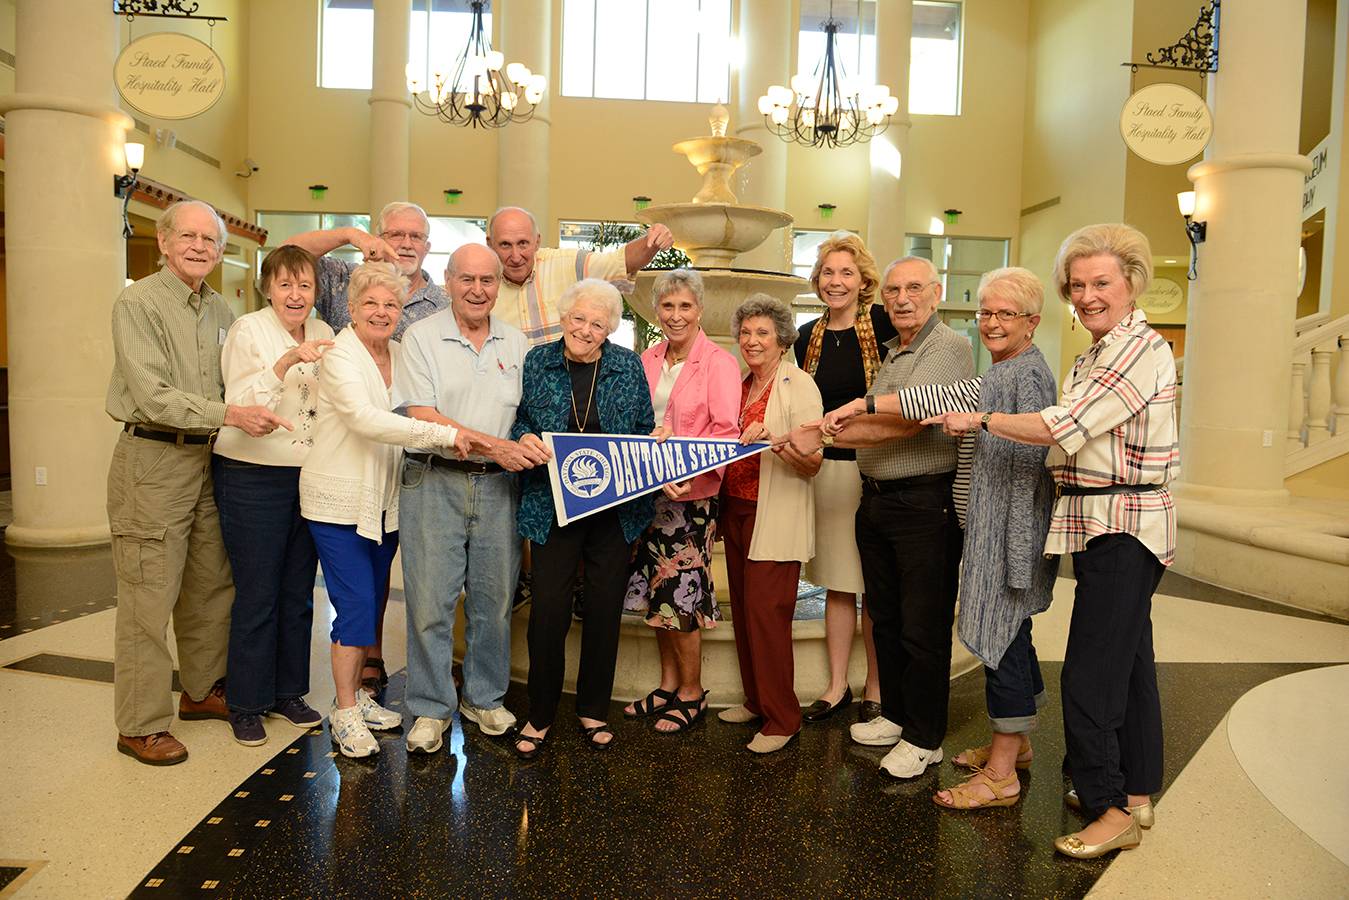 group of seniors attending WISE program event holding a Daytona State pennanten